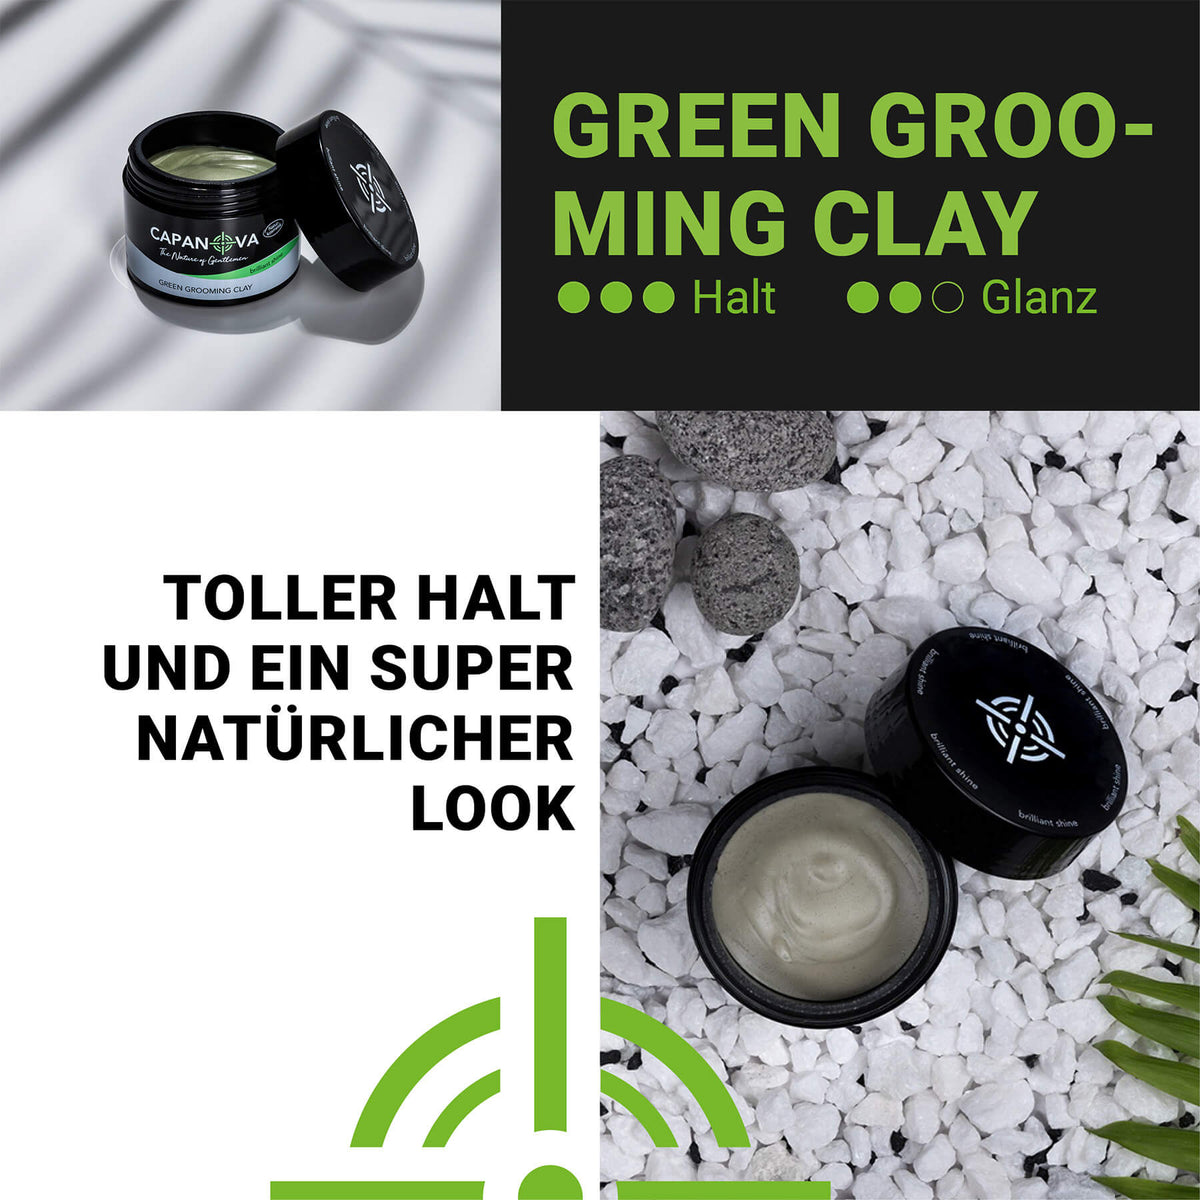 Green Grooming Clay